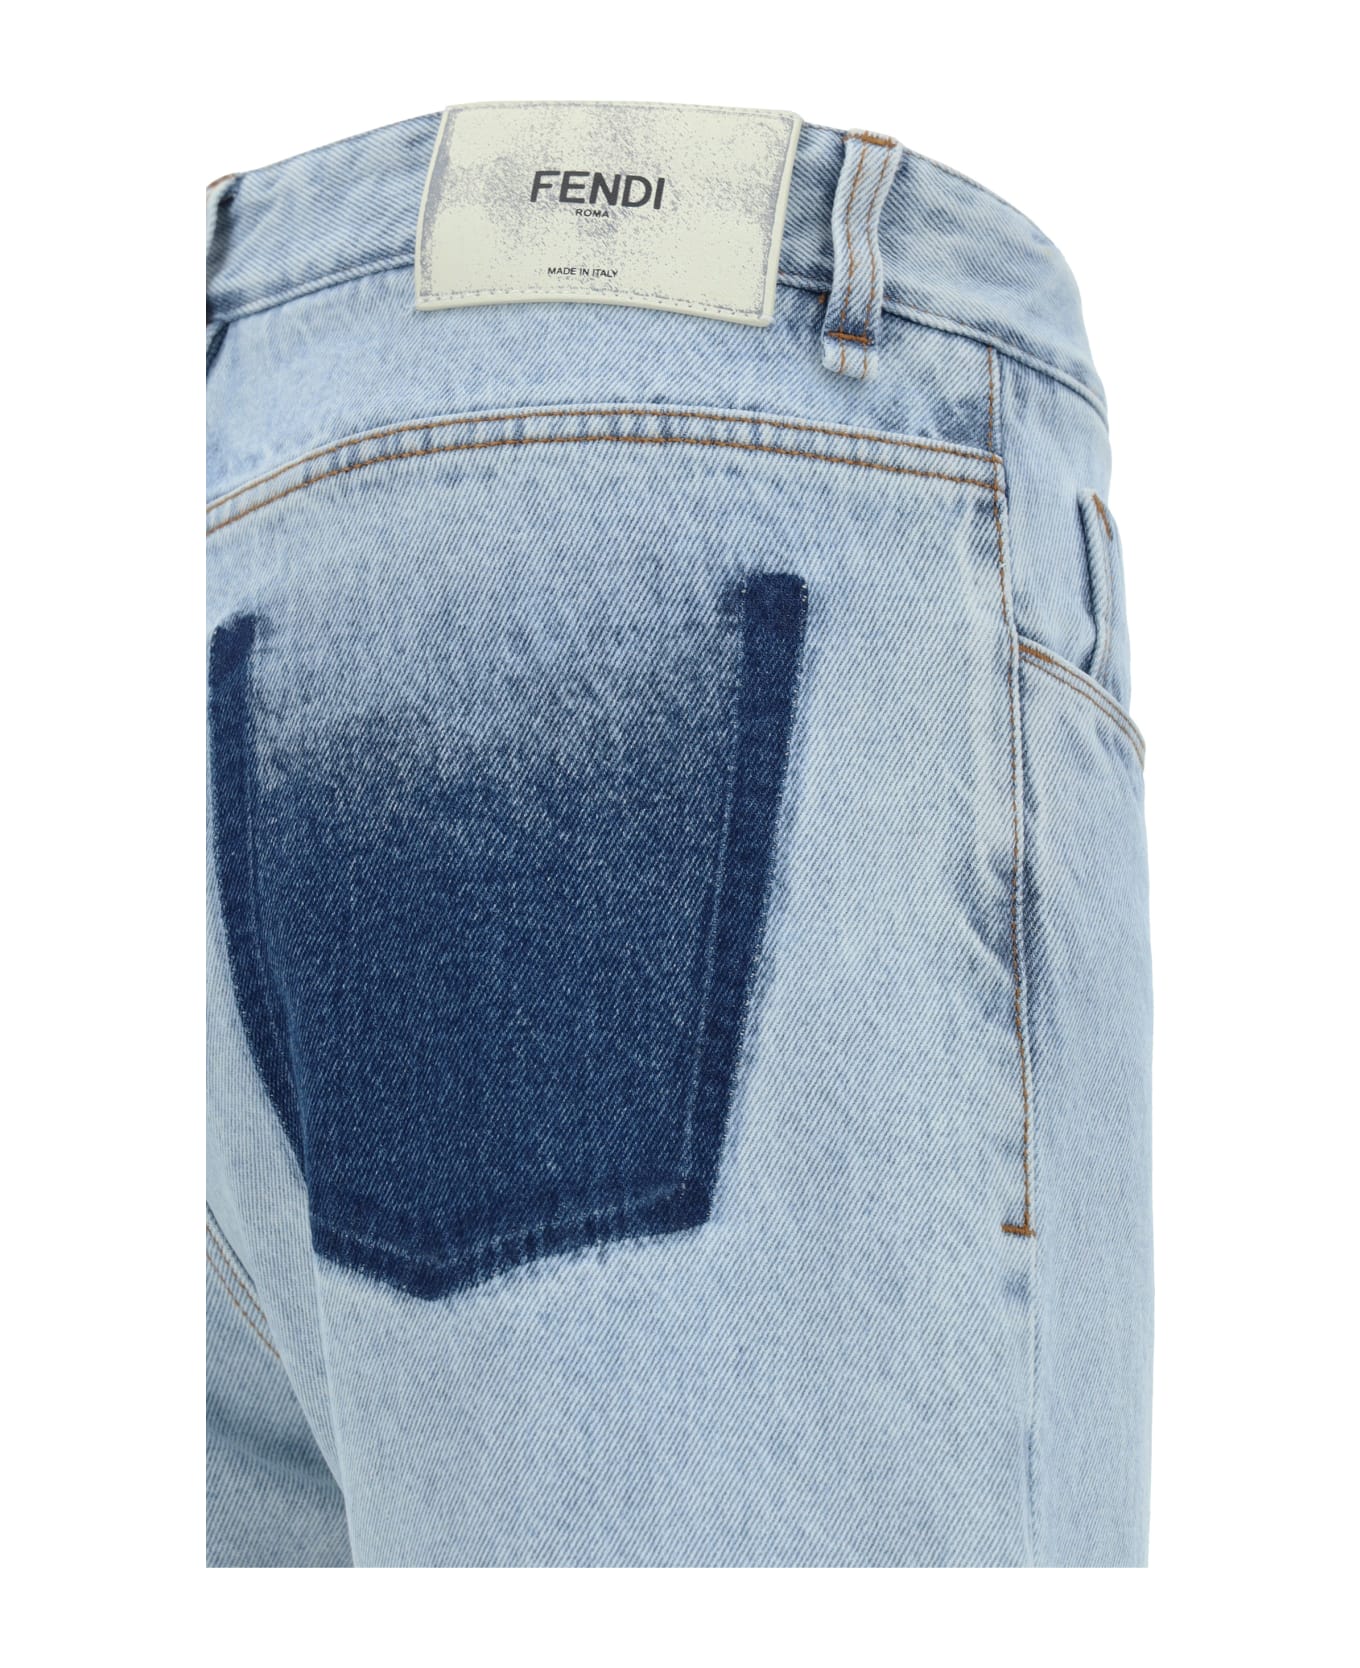 Fendi Jeans - Light Blue デニム